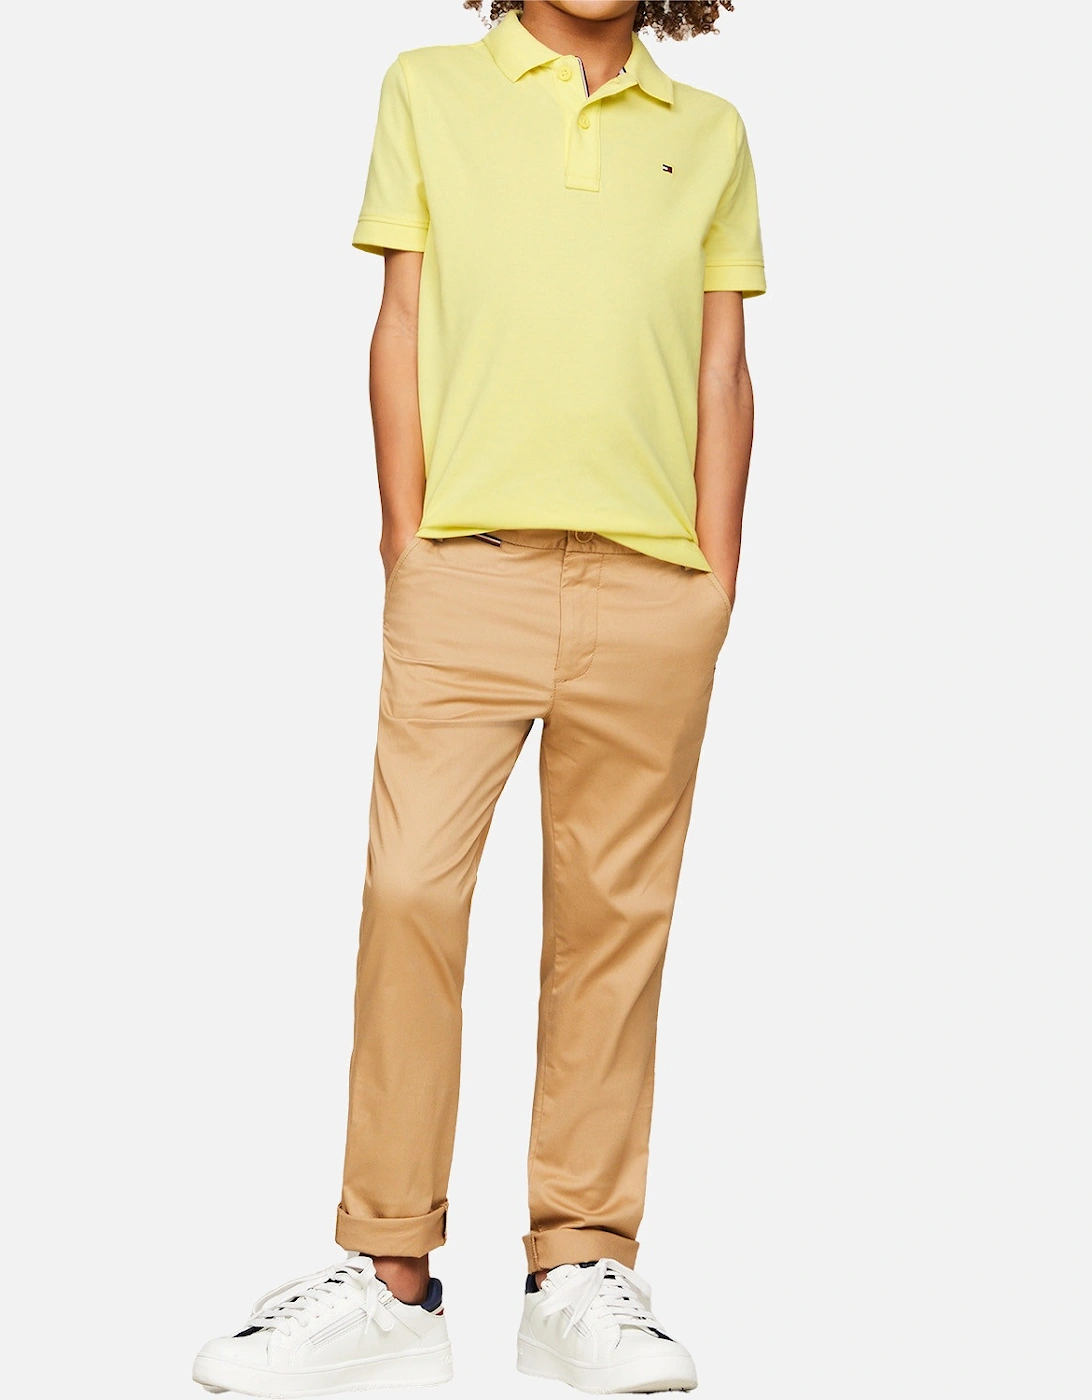 Juniors Embroidered Flag Polo Shirt (Yellow)